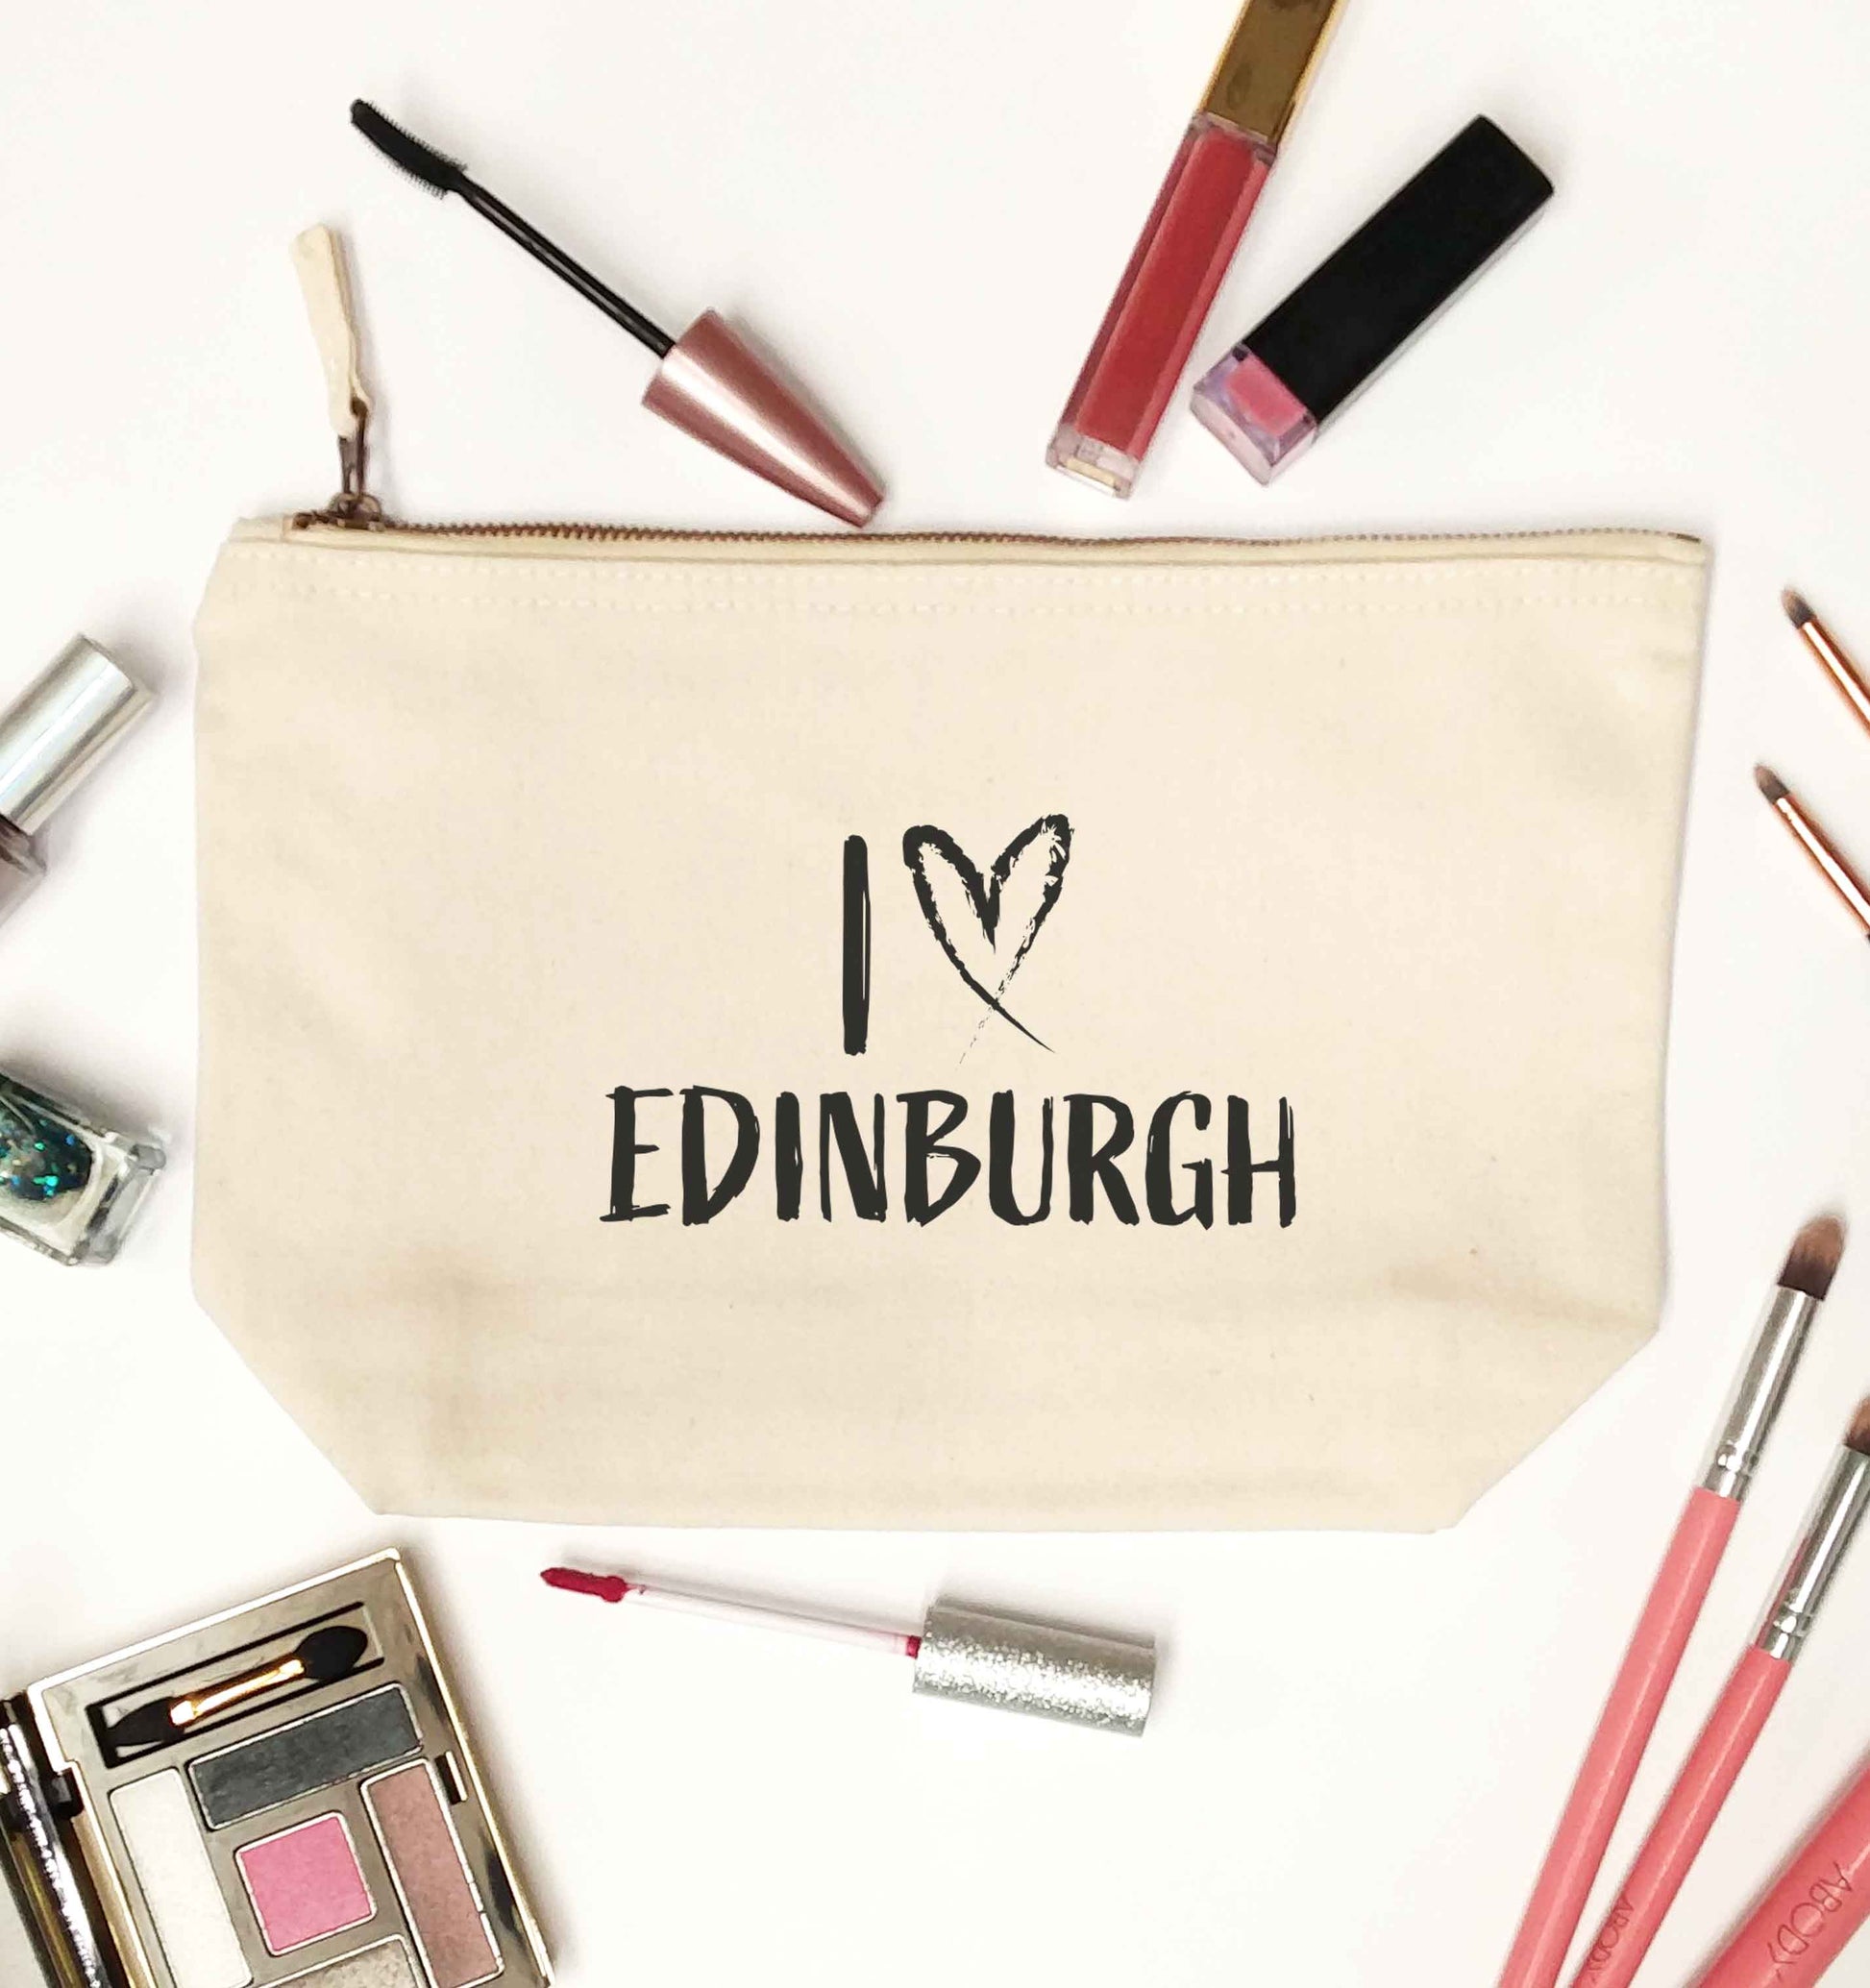 I love Edinburgh natural makeup bag